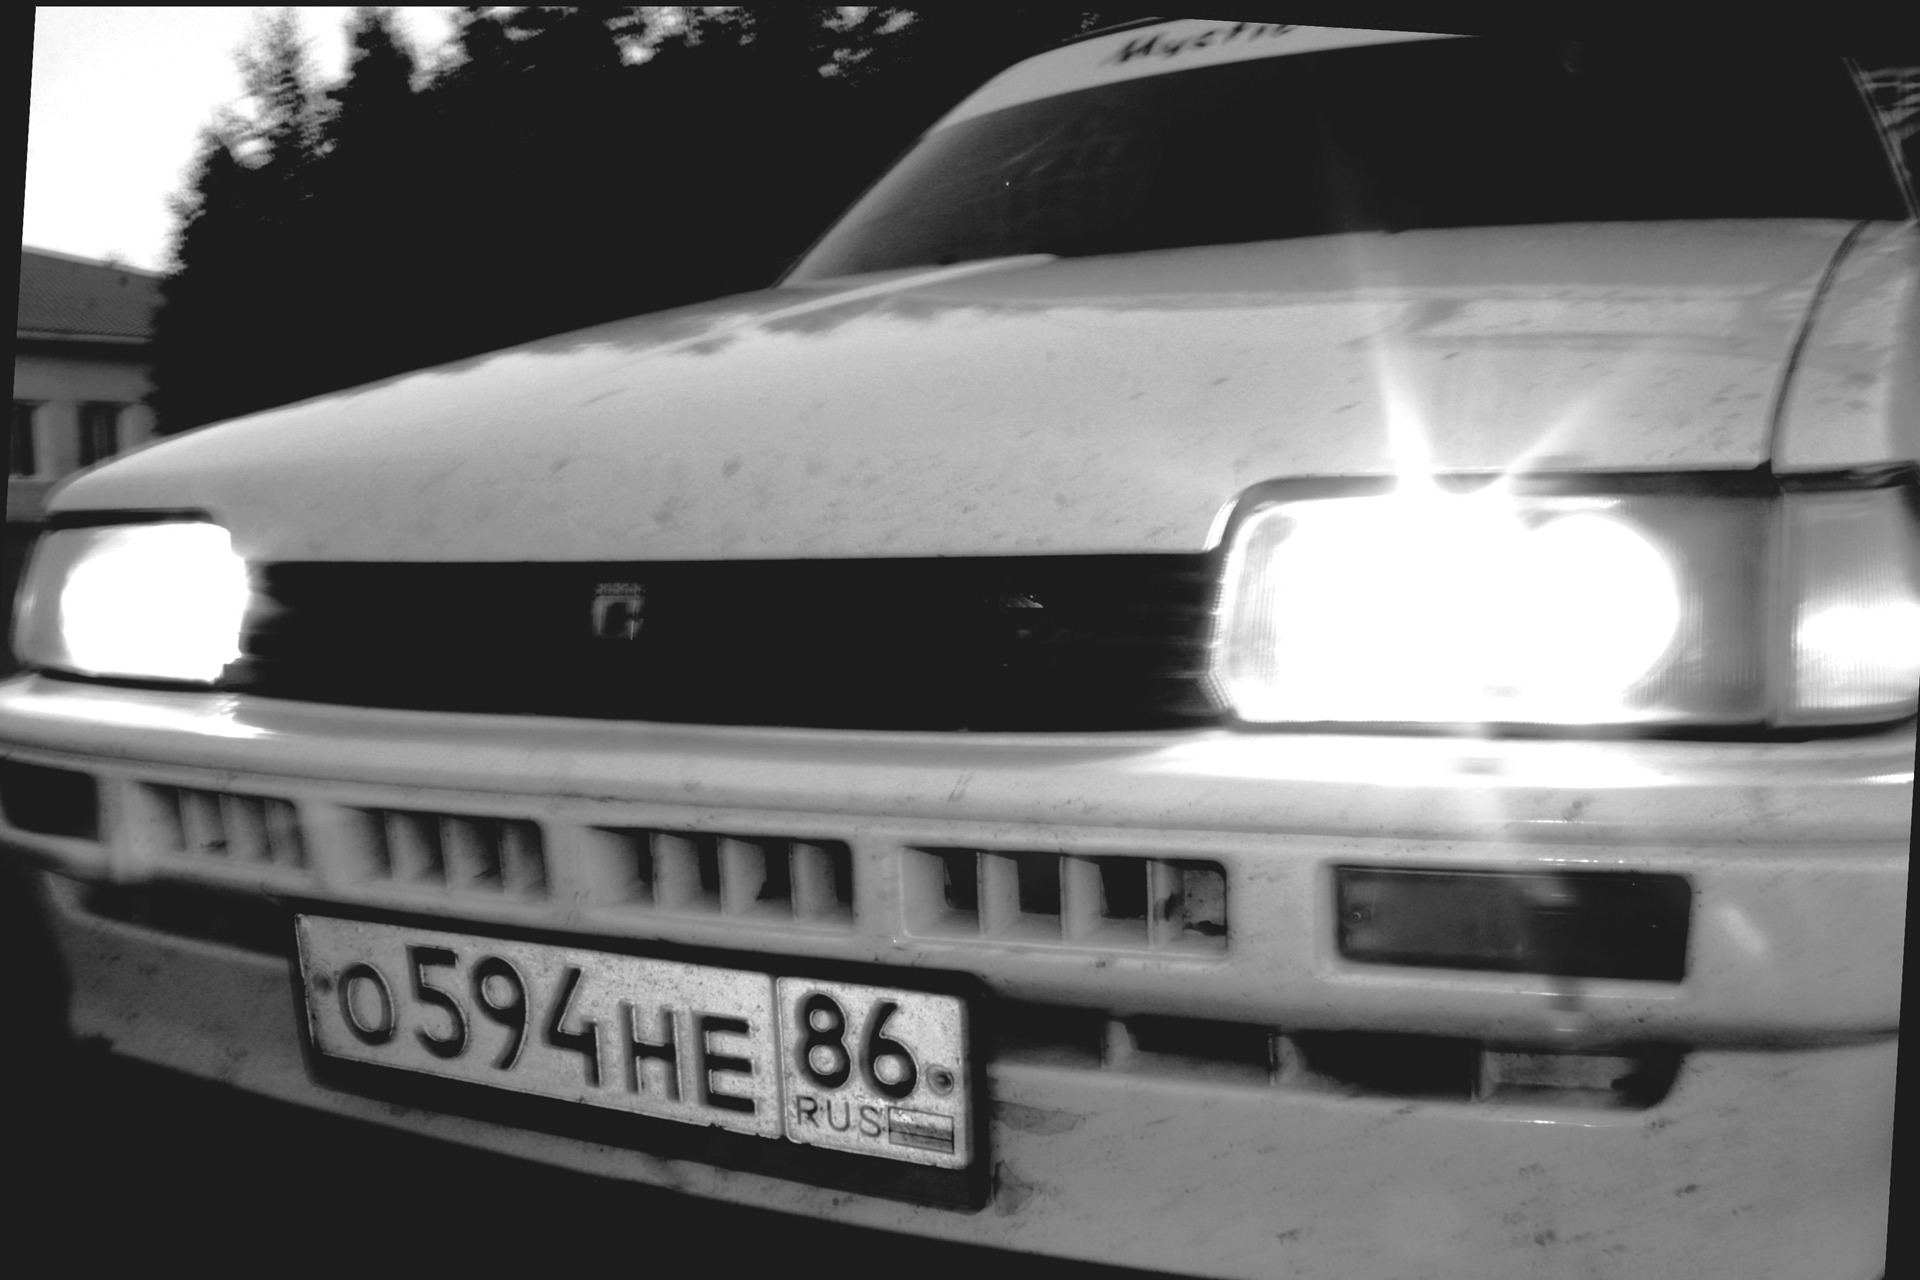       Toyota Corolla FX 16 1992 